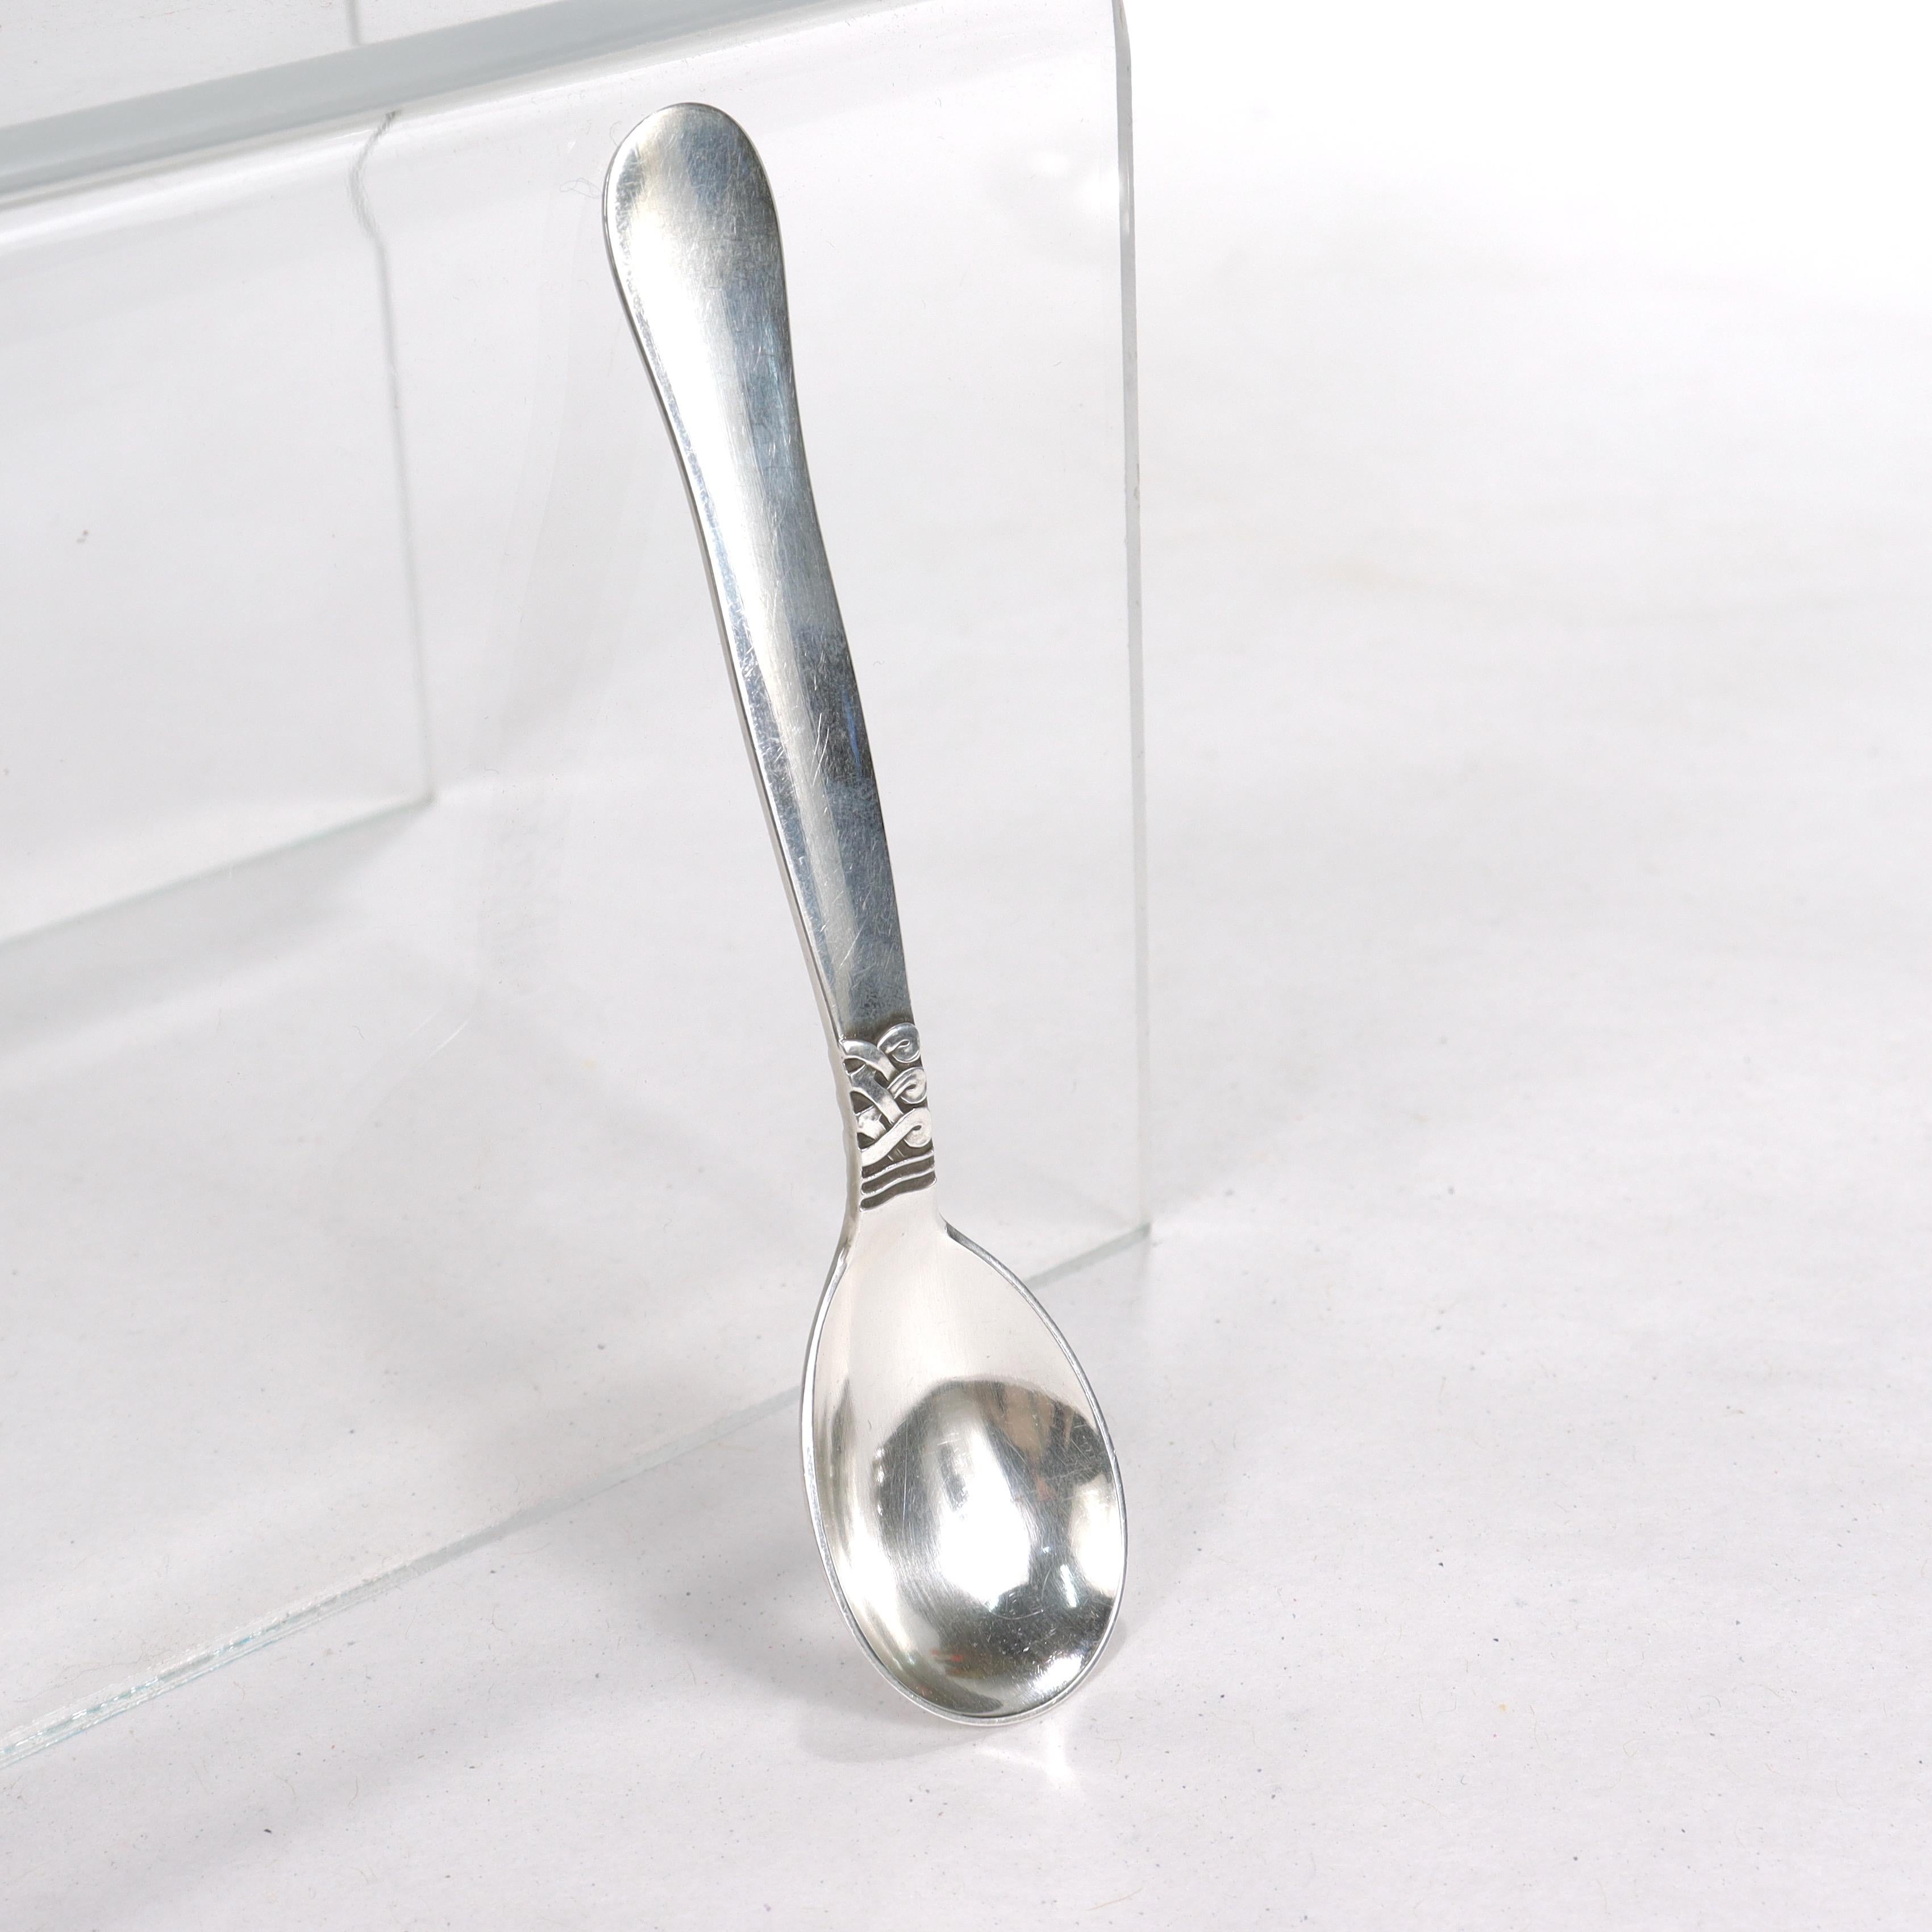 teaspoon vs coffee spoon